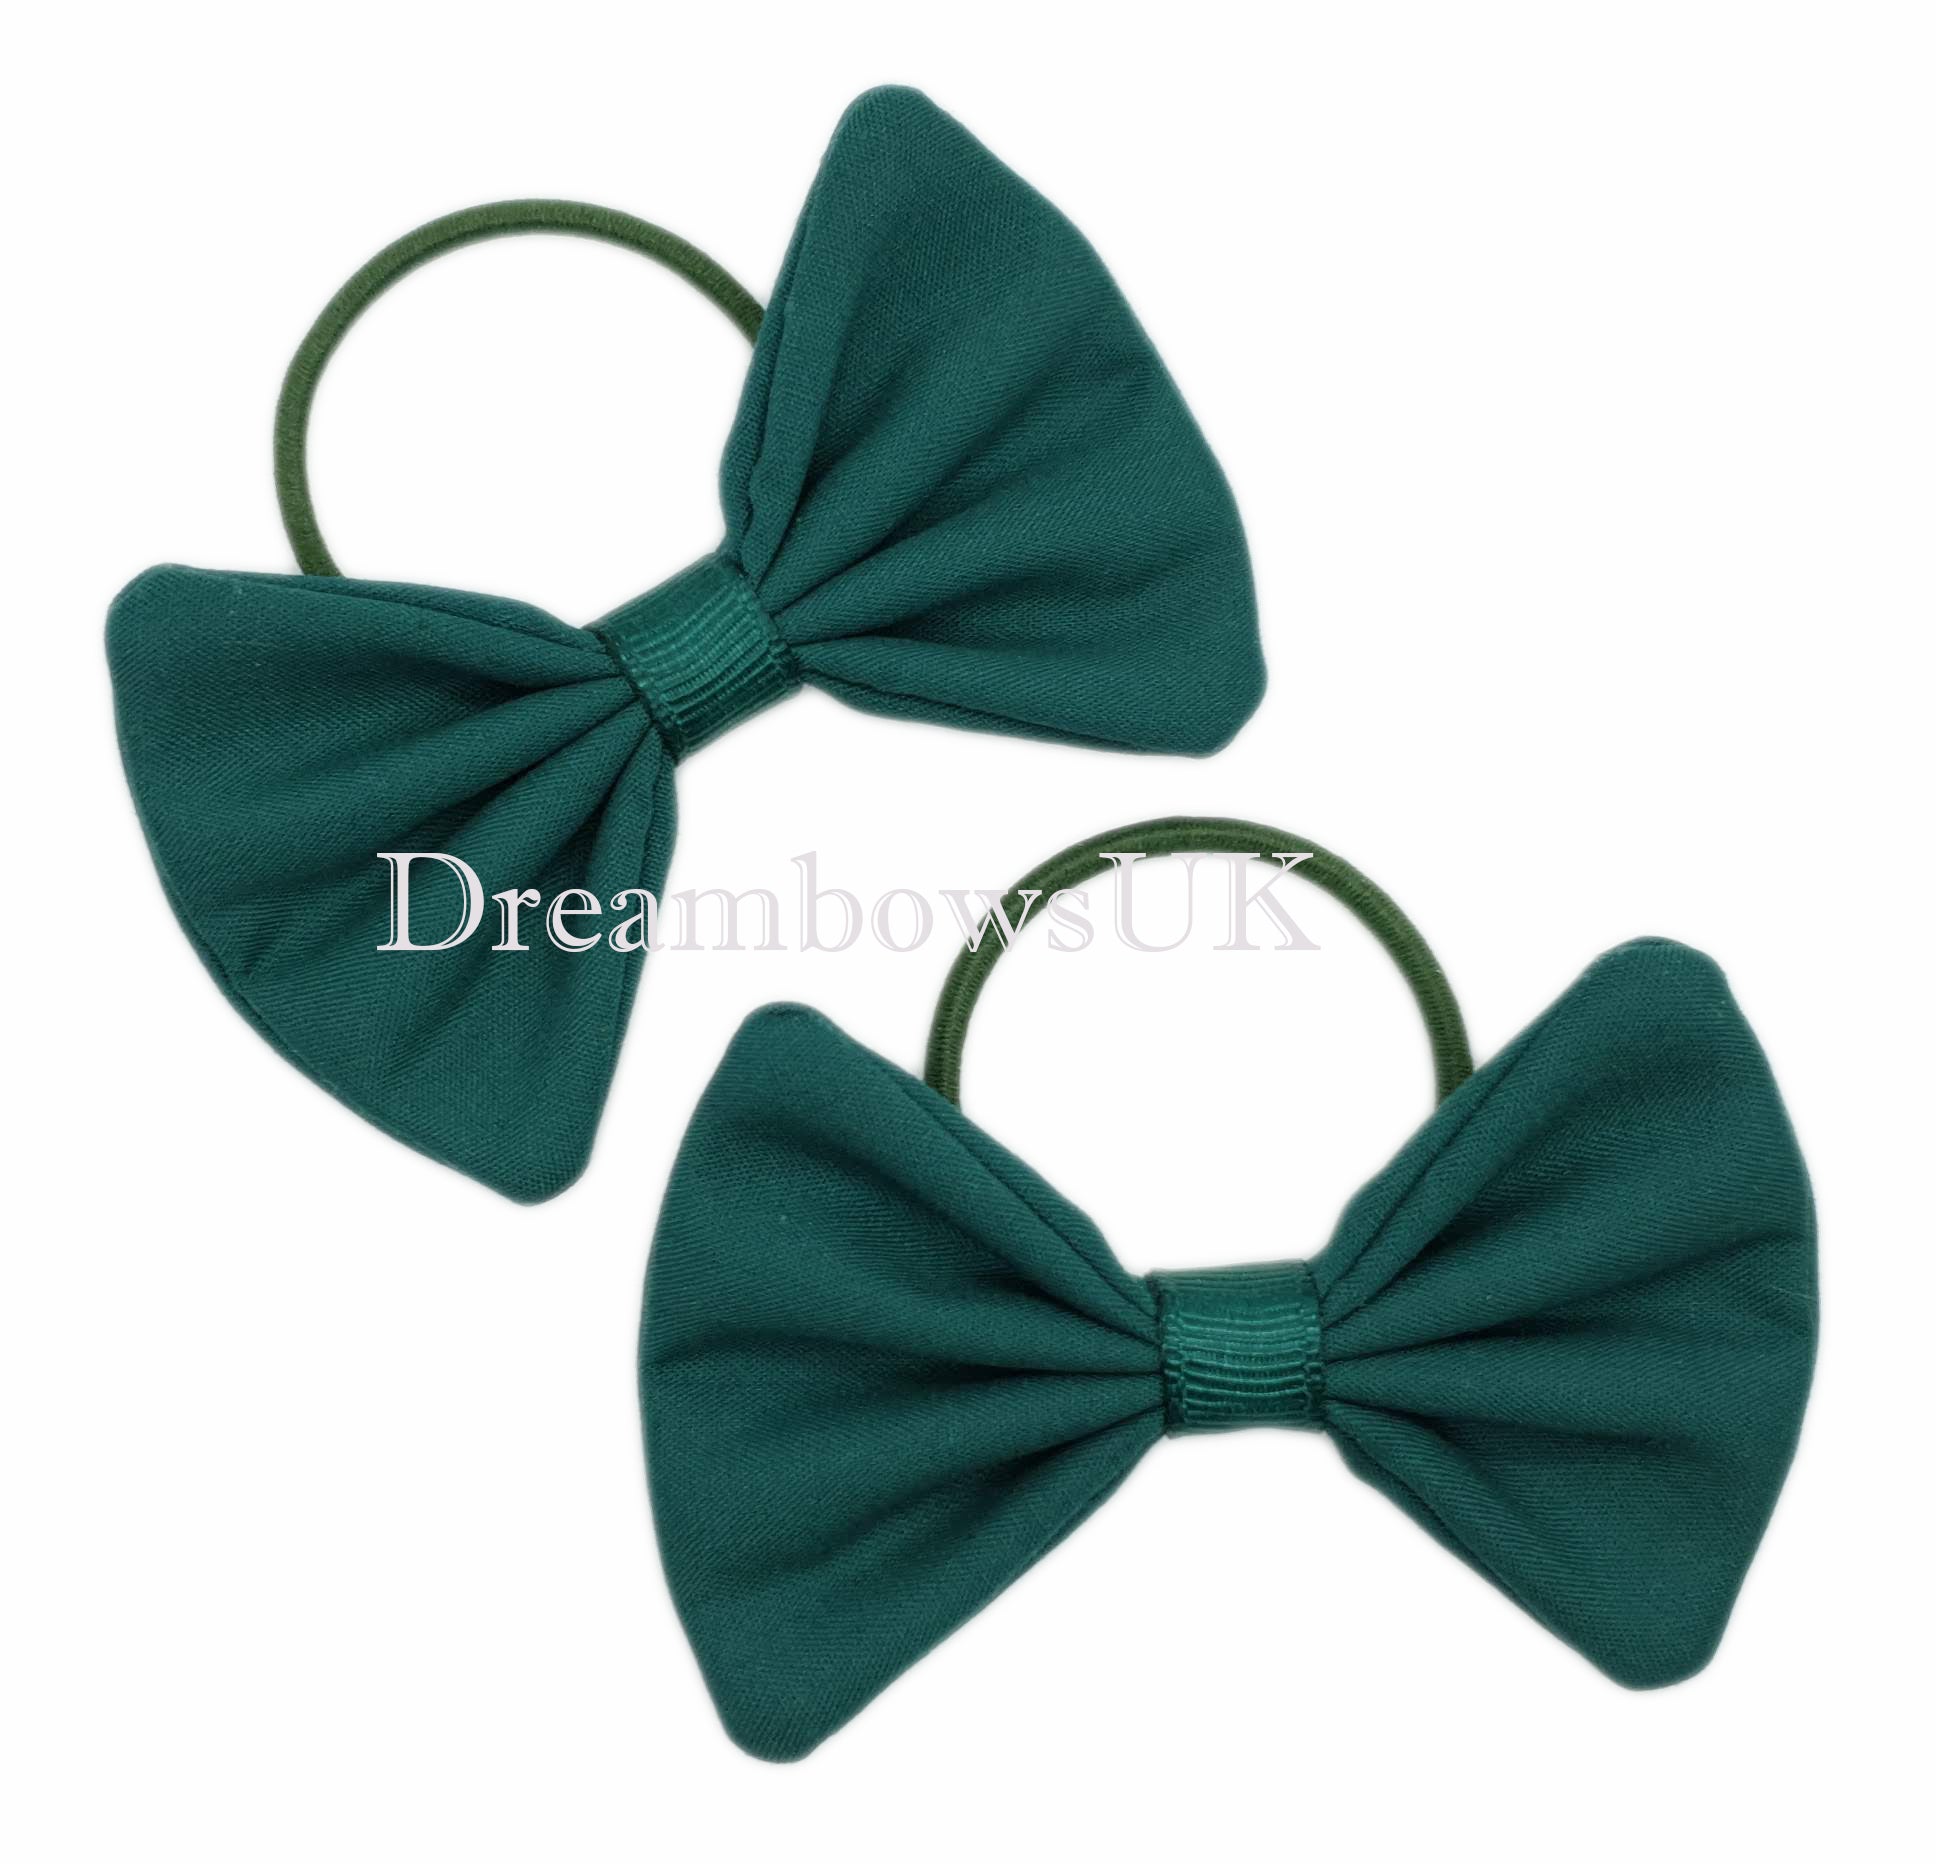 Girls dark green school hair bows on thin hair ties